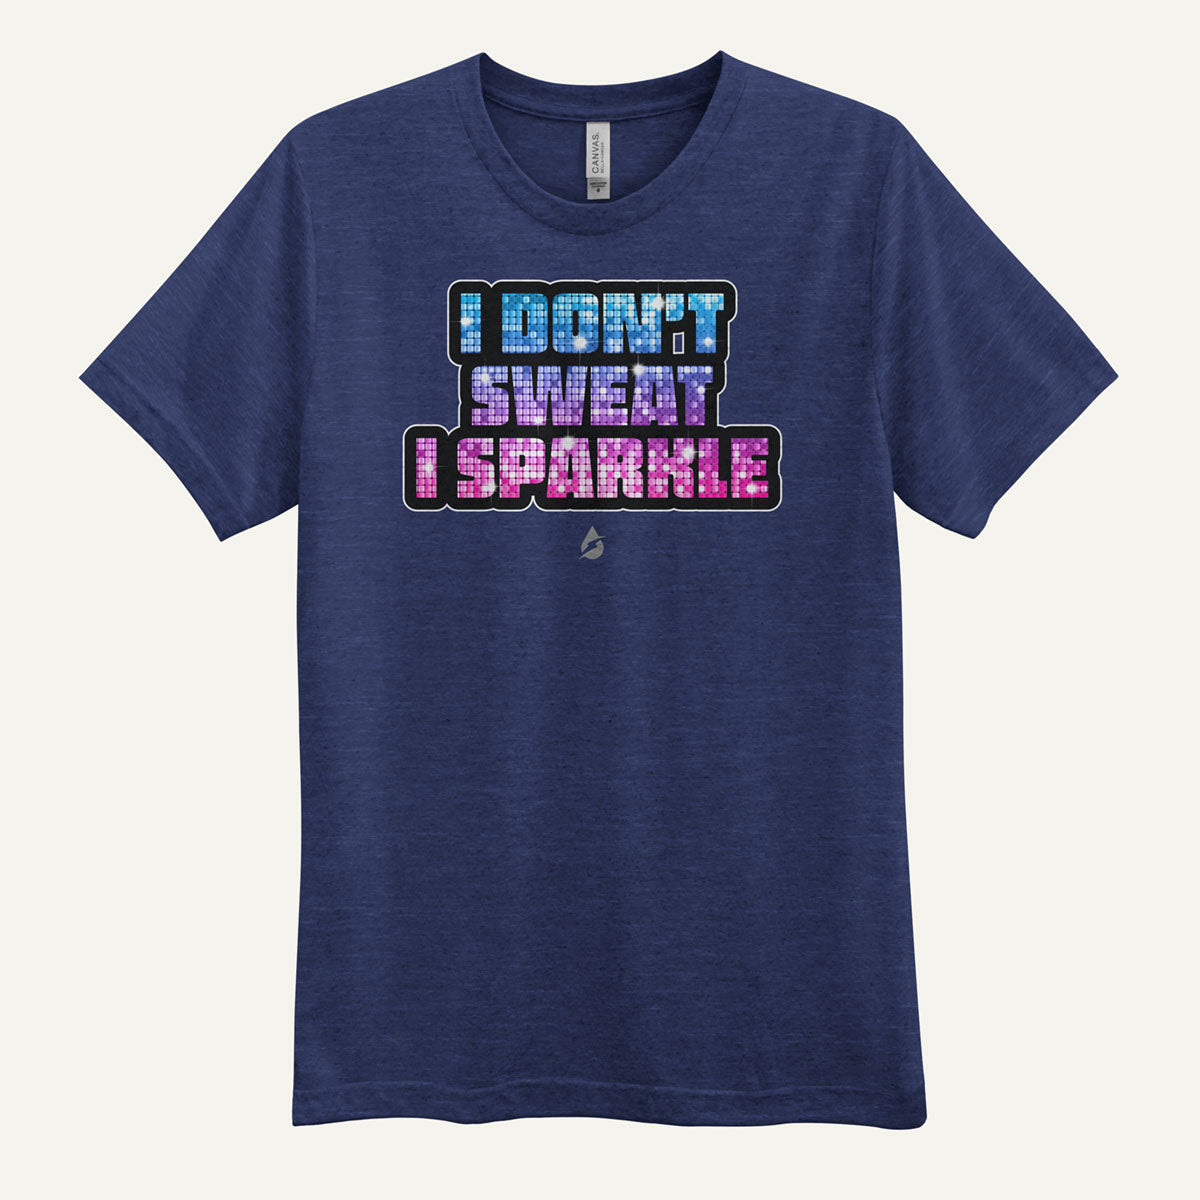 I Don't Sweat I Sparkle Men's Triblend T-Shirt